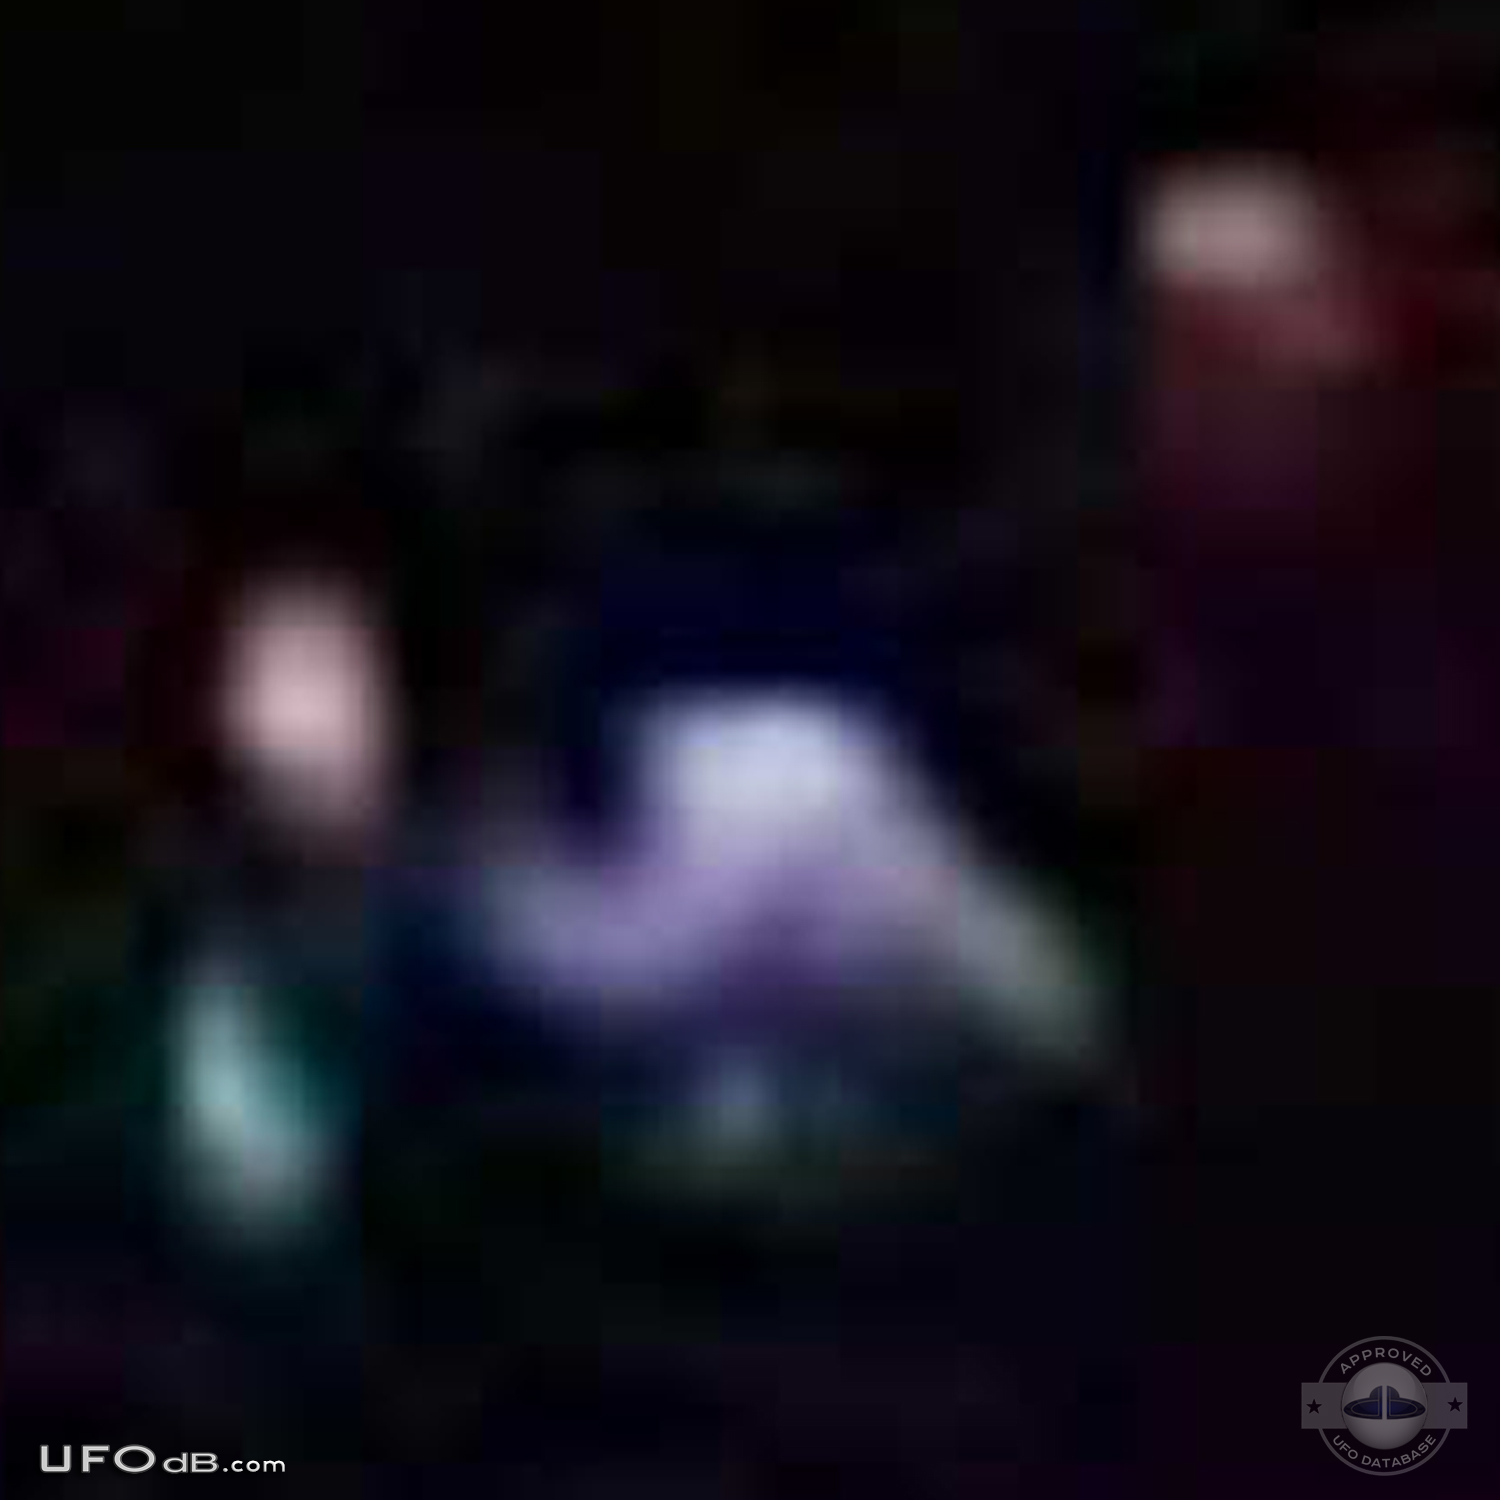 UFO with strange shape caught on picture over Santa Tecla, El Salvador UFO Picture #387-4